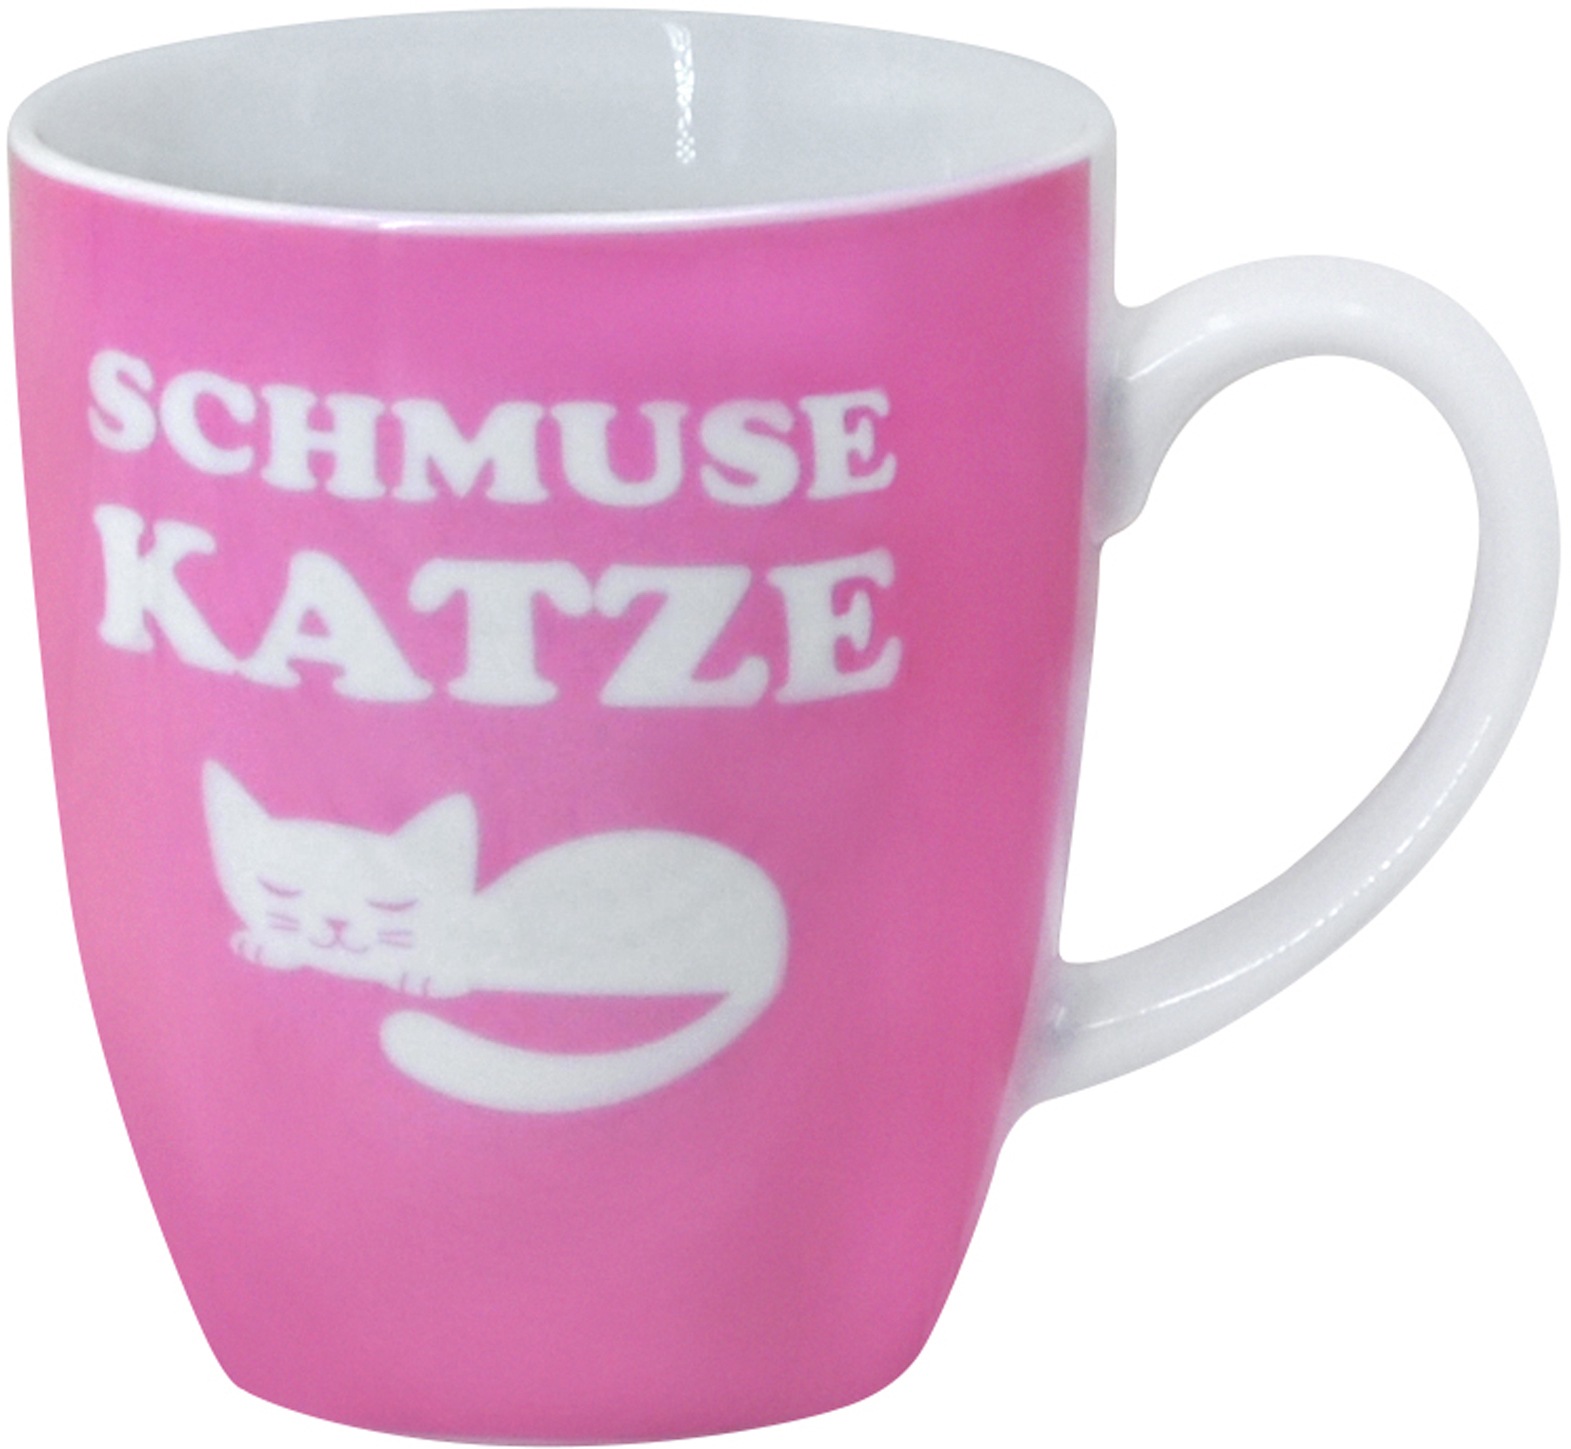 Retsch Arzberg Becher »Schmusekatze & Lausbub«, (Set, 4 tlg.), 4-teilig